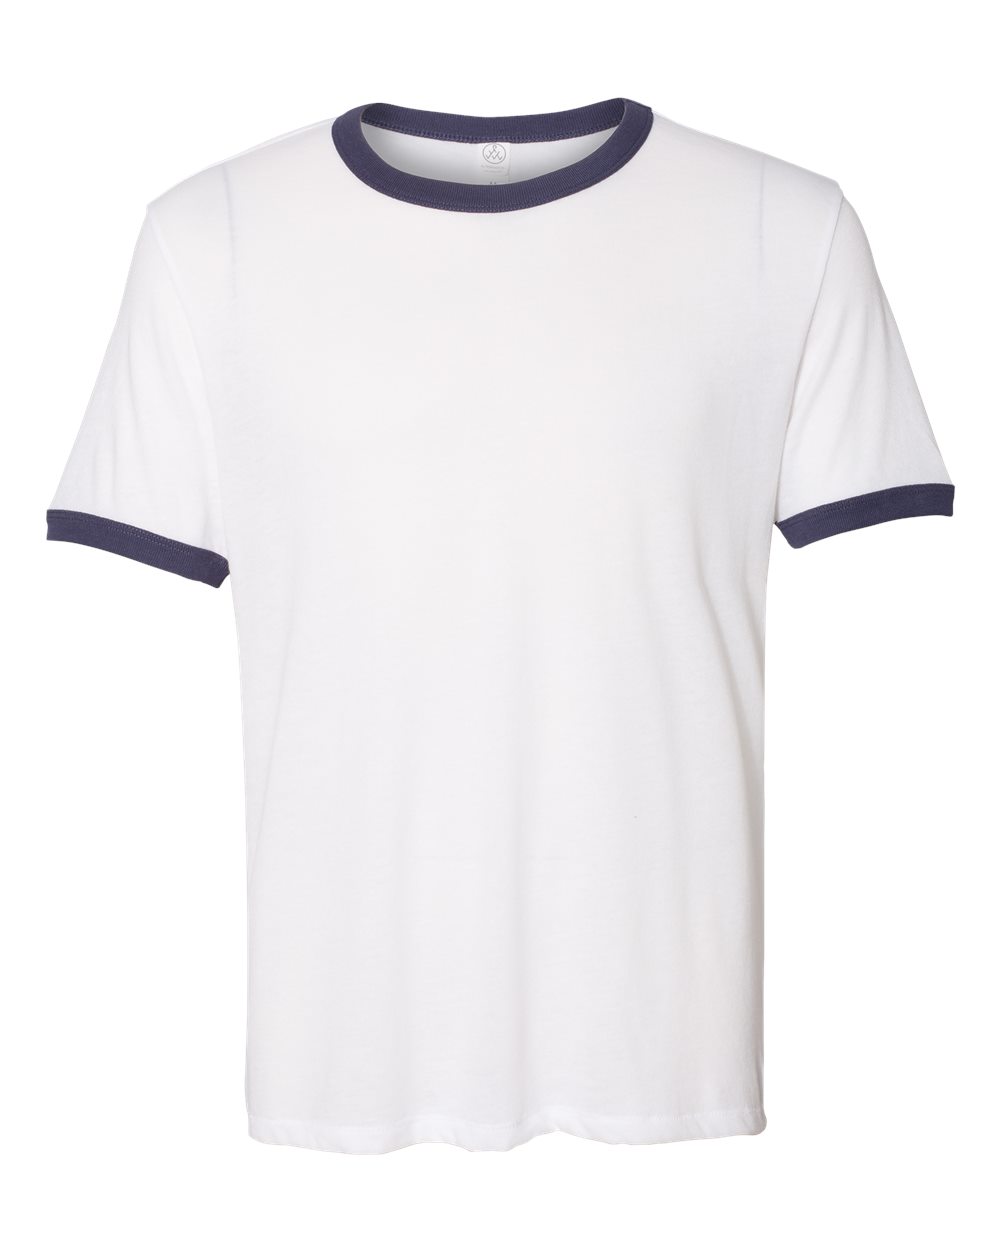 Alternative Mens Vintage 5050 Keeper Ringer Tee Shirt Blank Plain 5103 ...